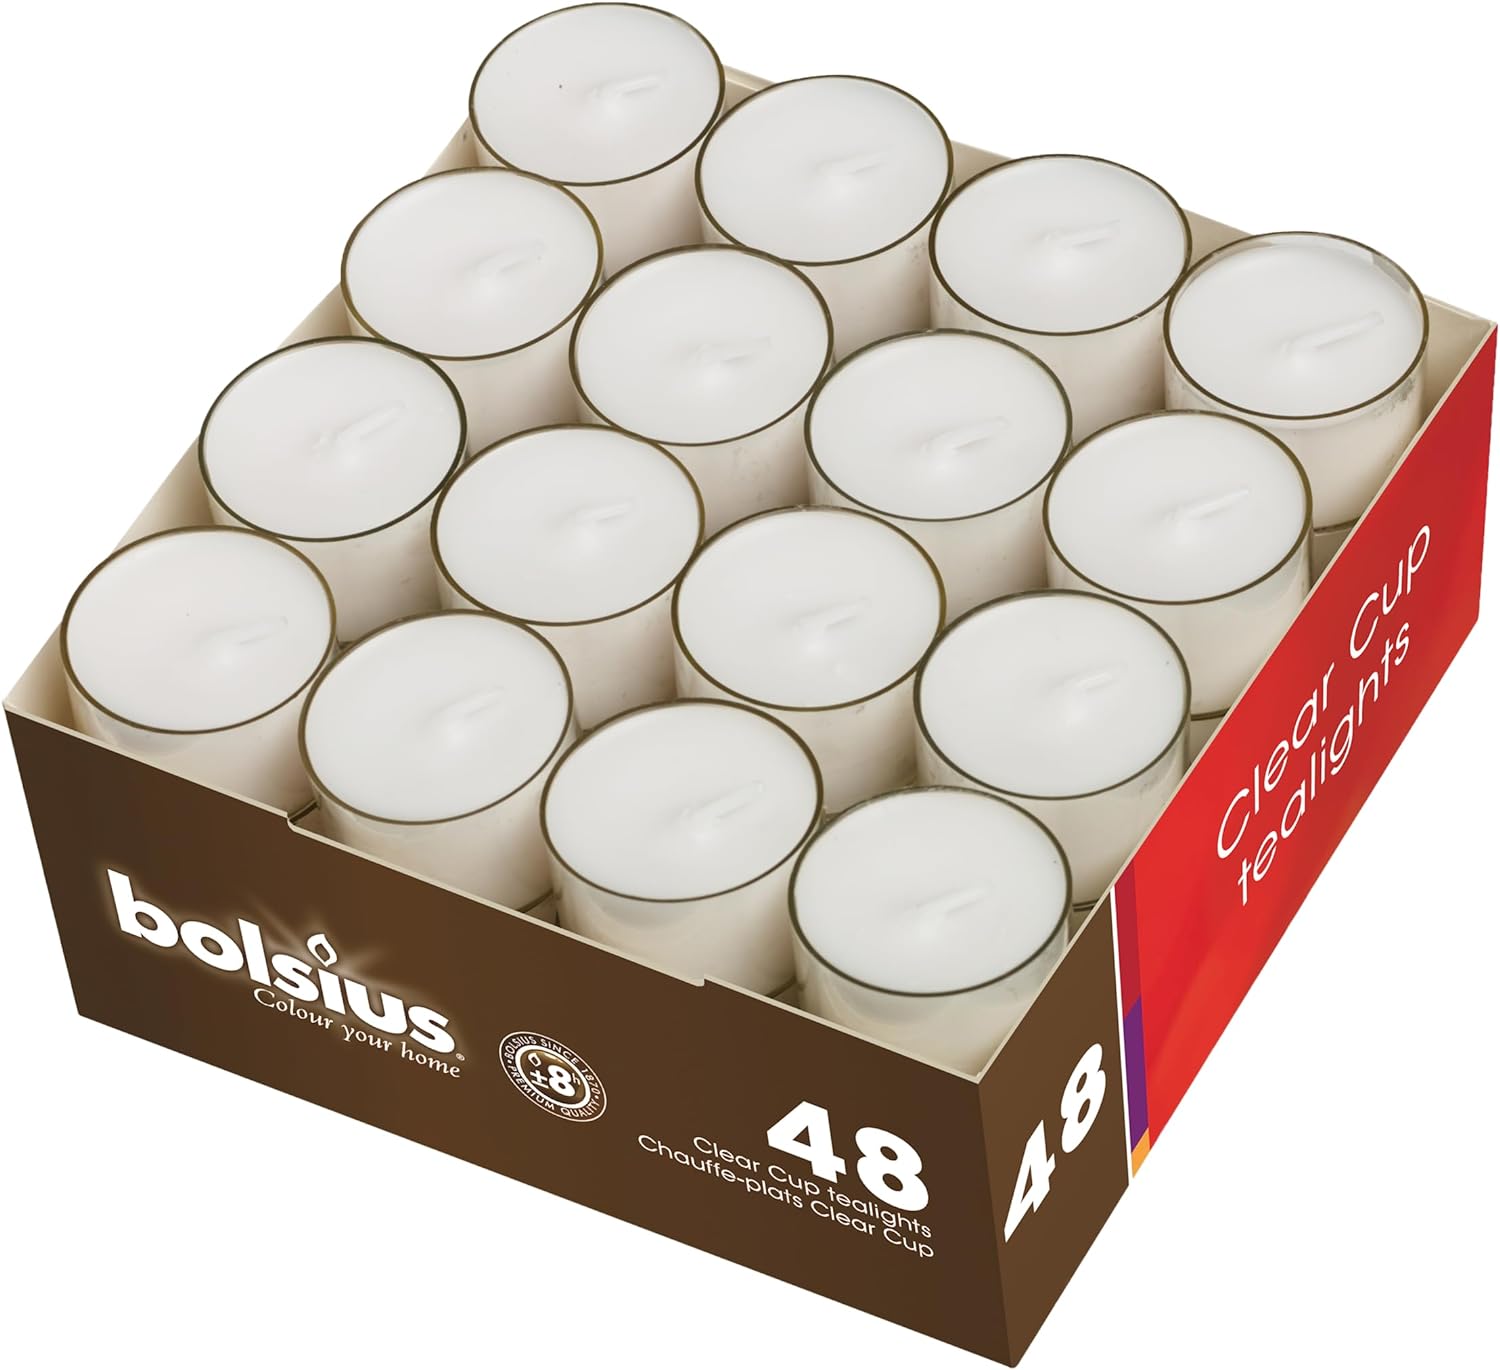 Ohr Tea Light Candles - 100 Bulk Pack - White Unscented Travel, Centerpiece